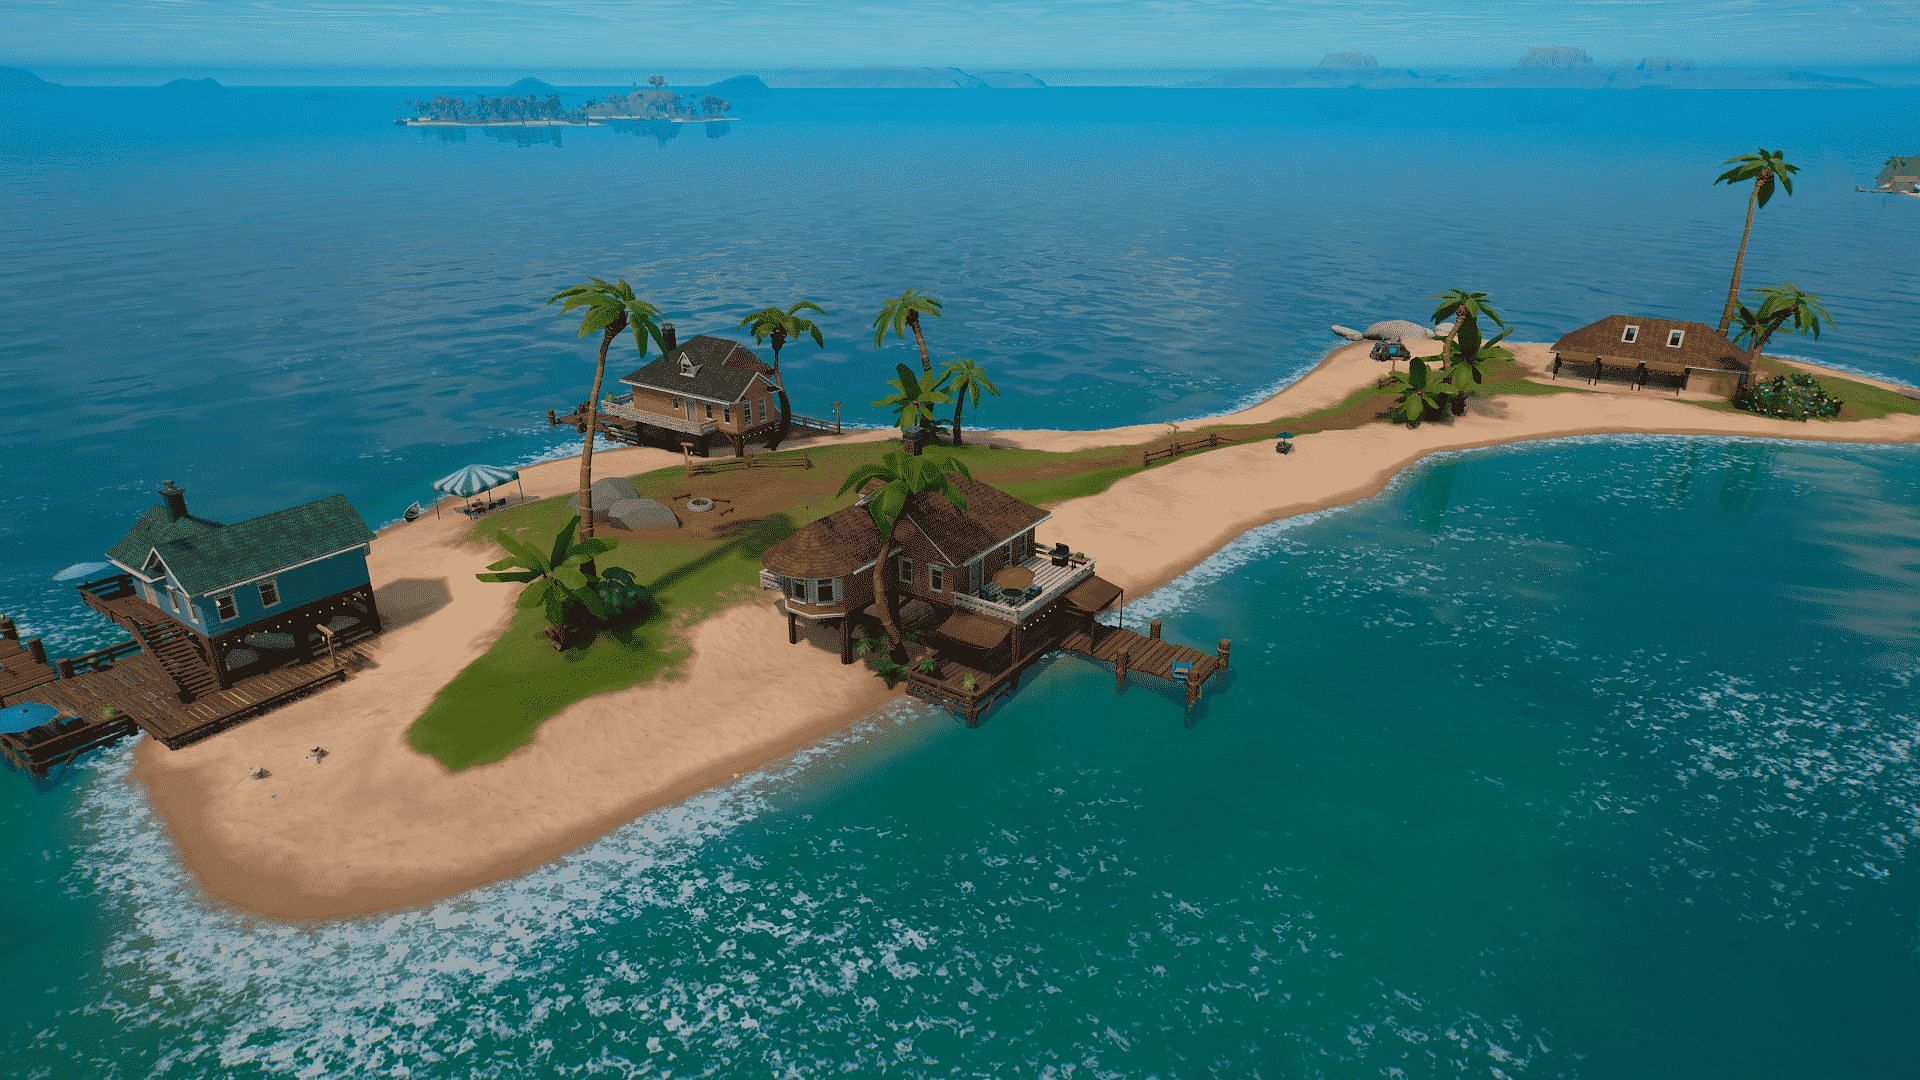 The Sunburned Shack landmark sits among the islands on the east portion of the Fortnite map (Image via Epic Games)